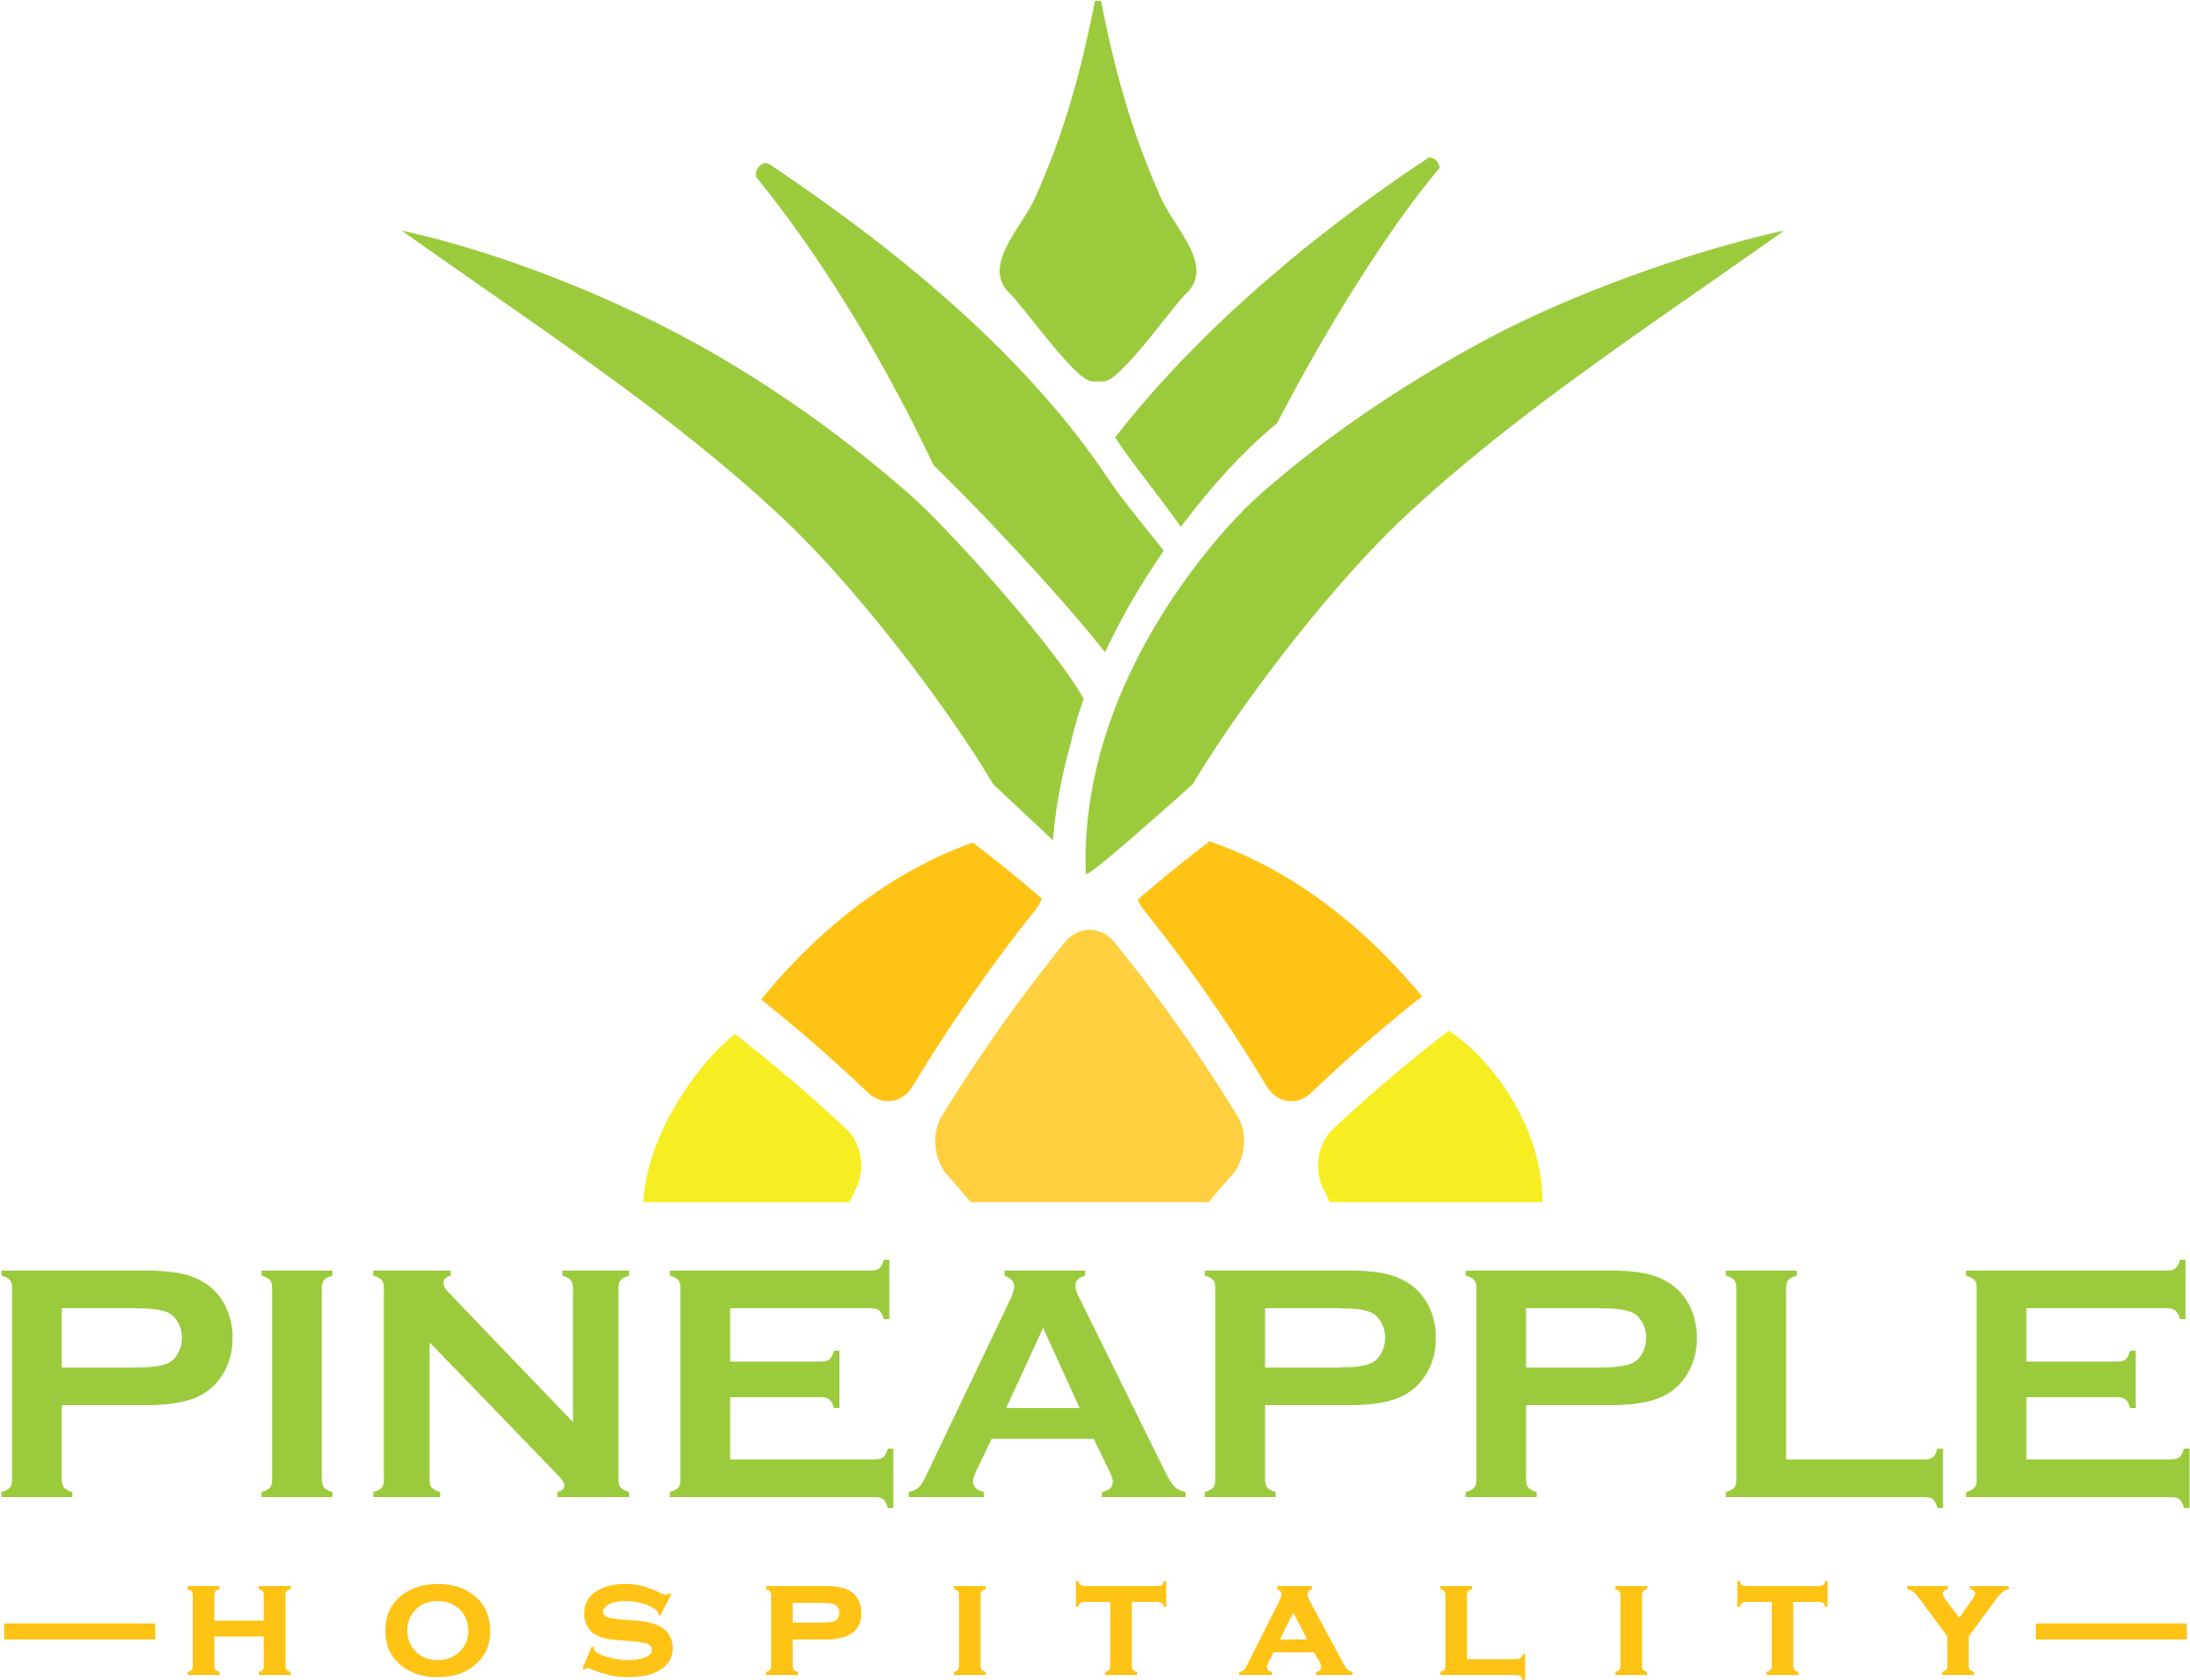 Hospitality Pineapple - Chimesofyourlife E4382 Wind Chime, Beagle/silver, 27-inch (2249x1734)